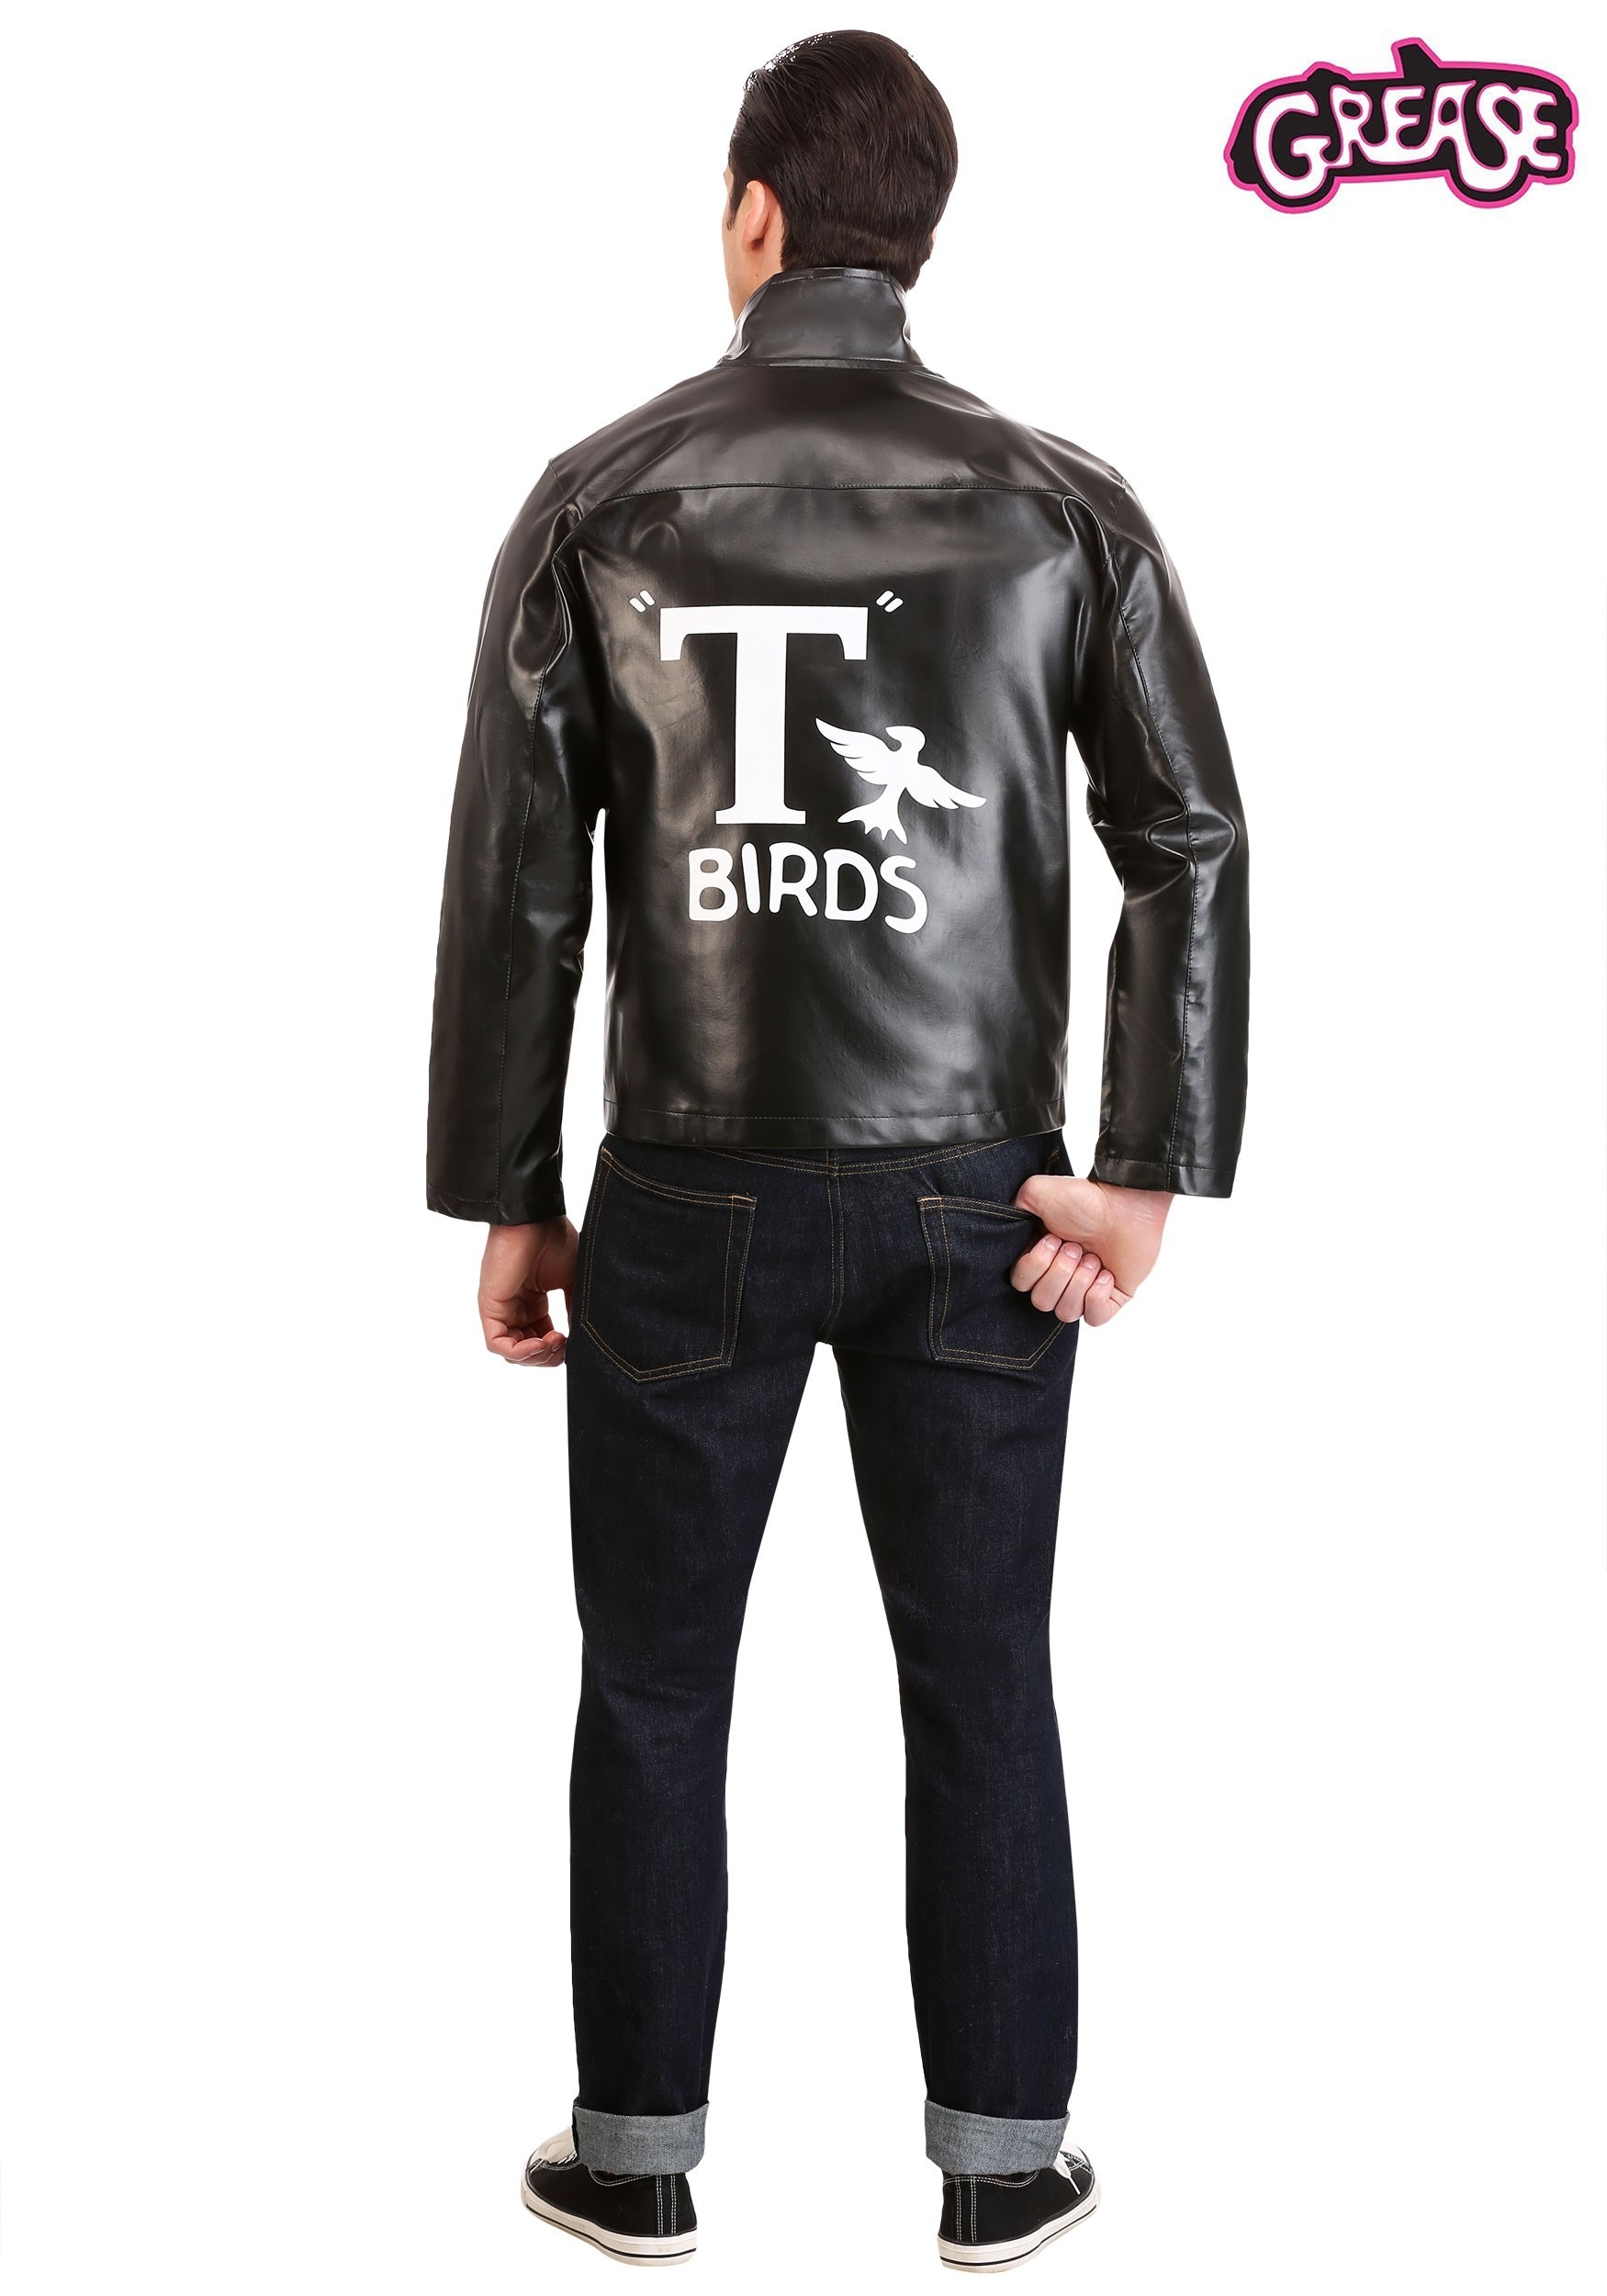 Chicos T-Bird Jacket Grasa Disfraz De Halloween